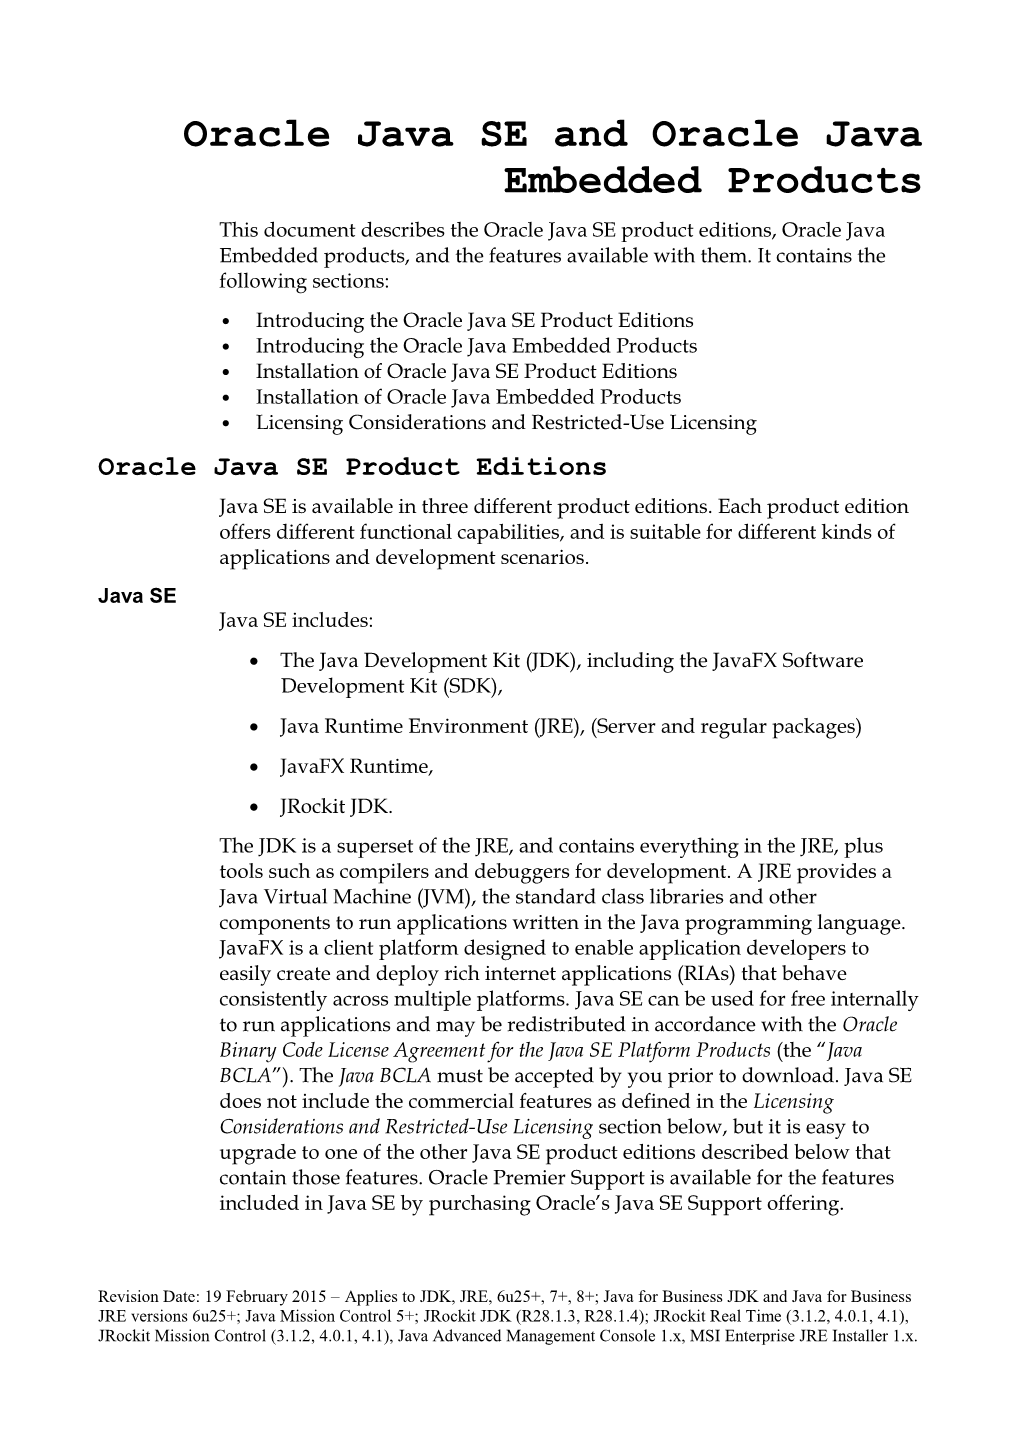 Java SE Products